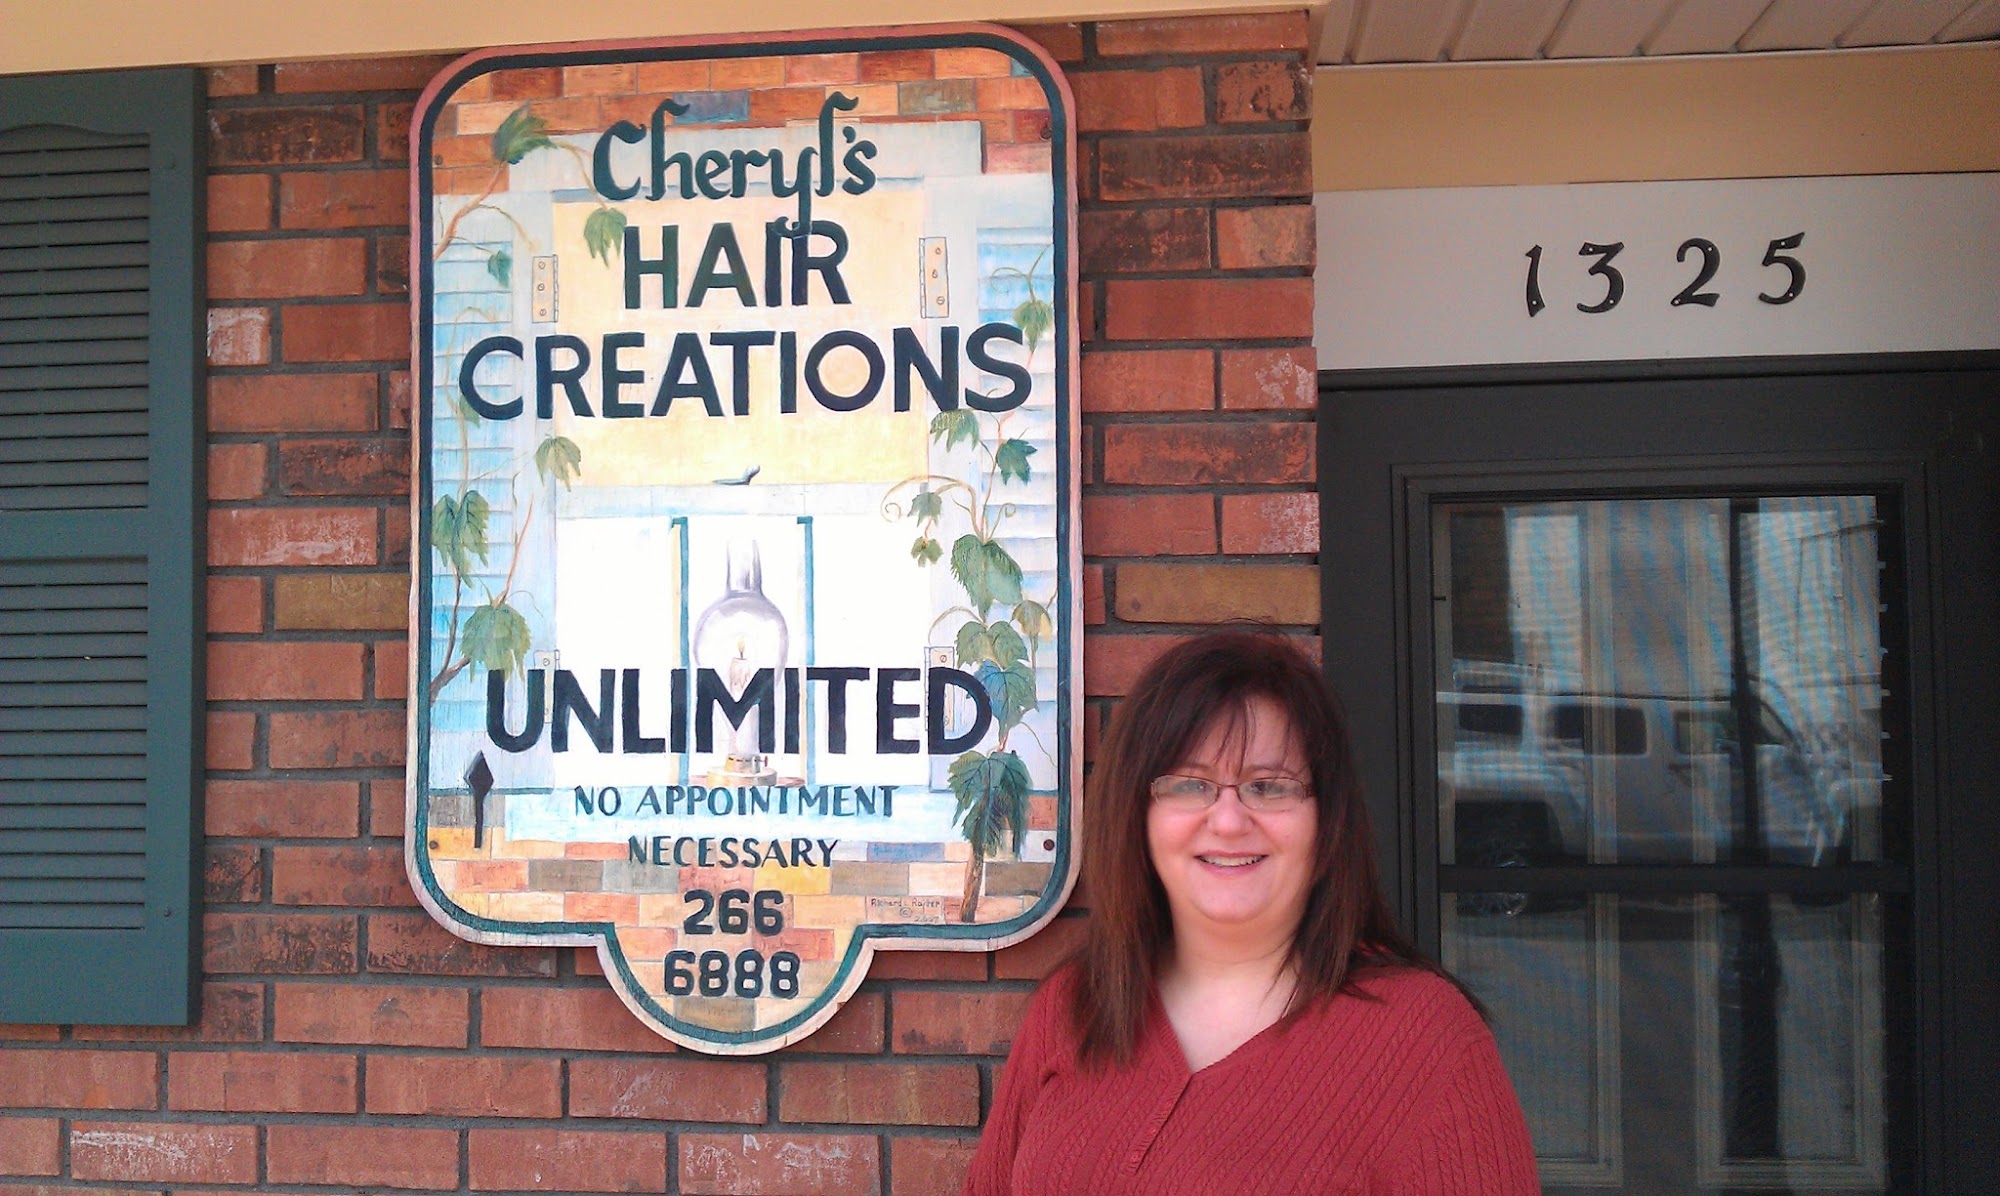 Cheryl's Hair Creations Unlimited 1325 Merchant St, Ambridge Pennsylvania 15003